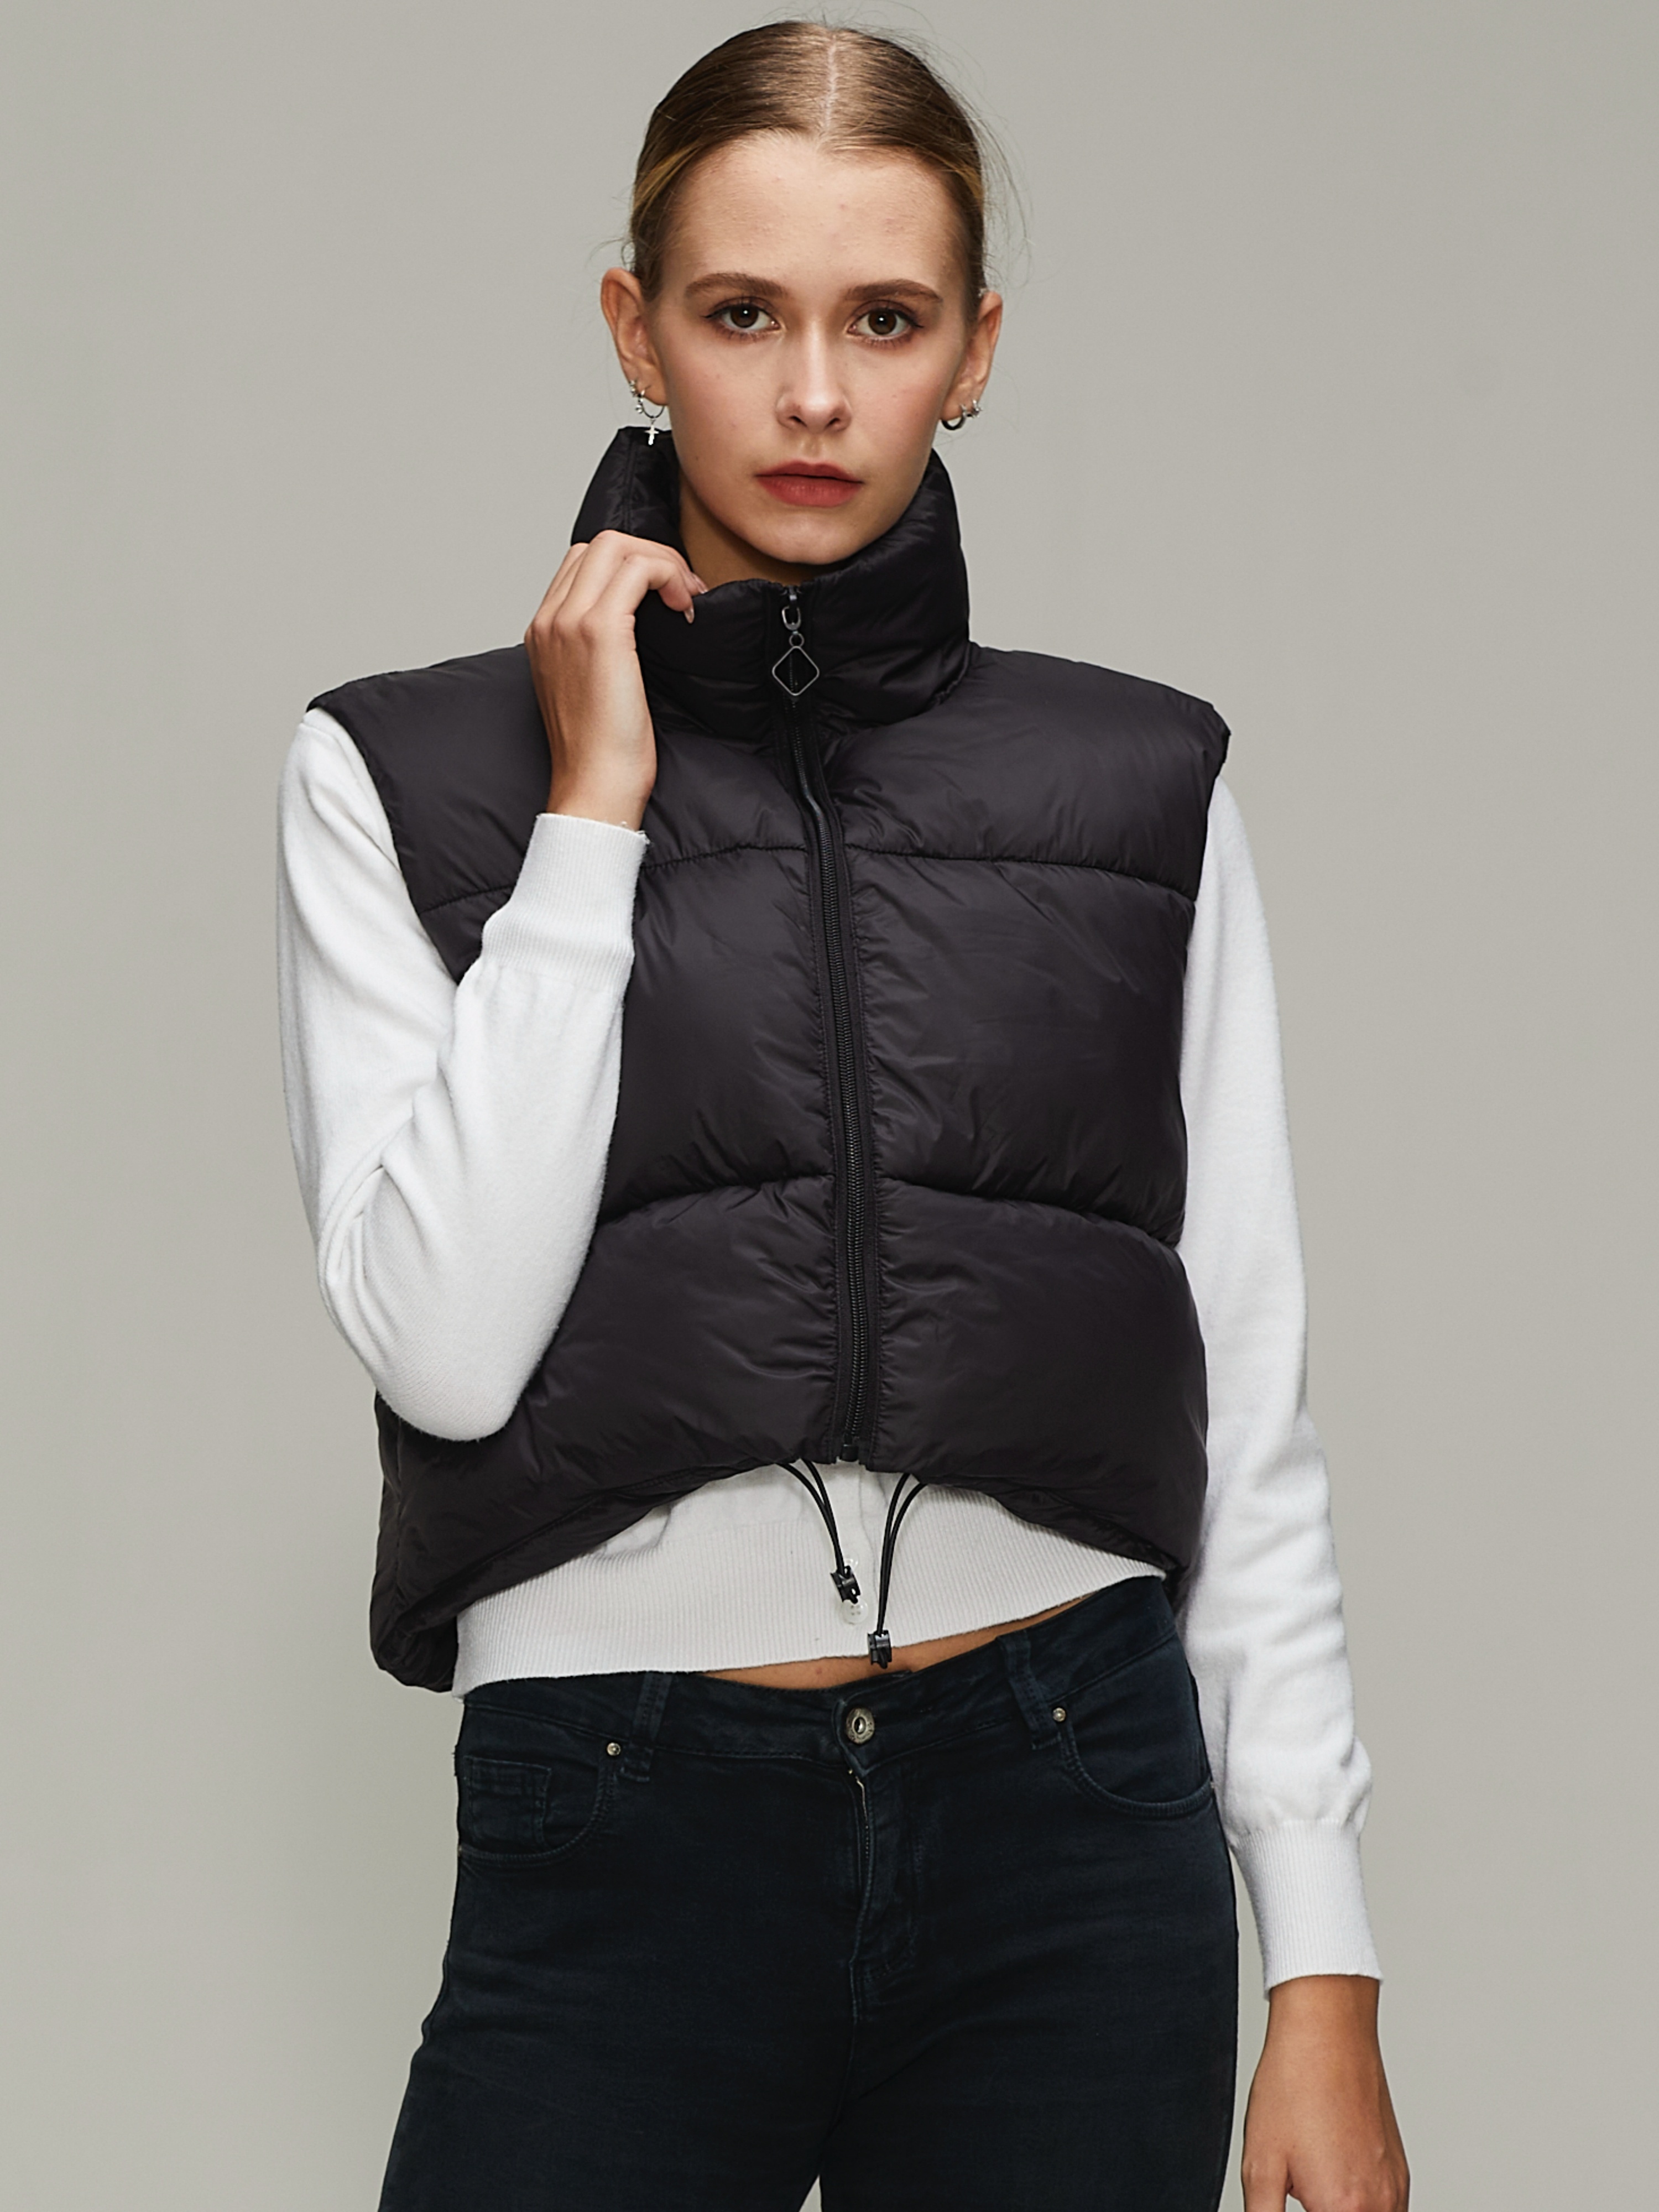 KEOMUD Women's Winter Crop Vest Lightweight Sleeveless Warm